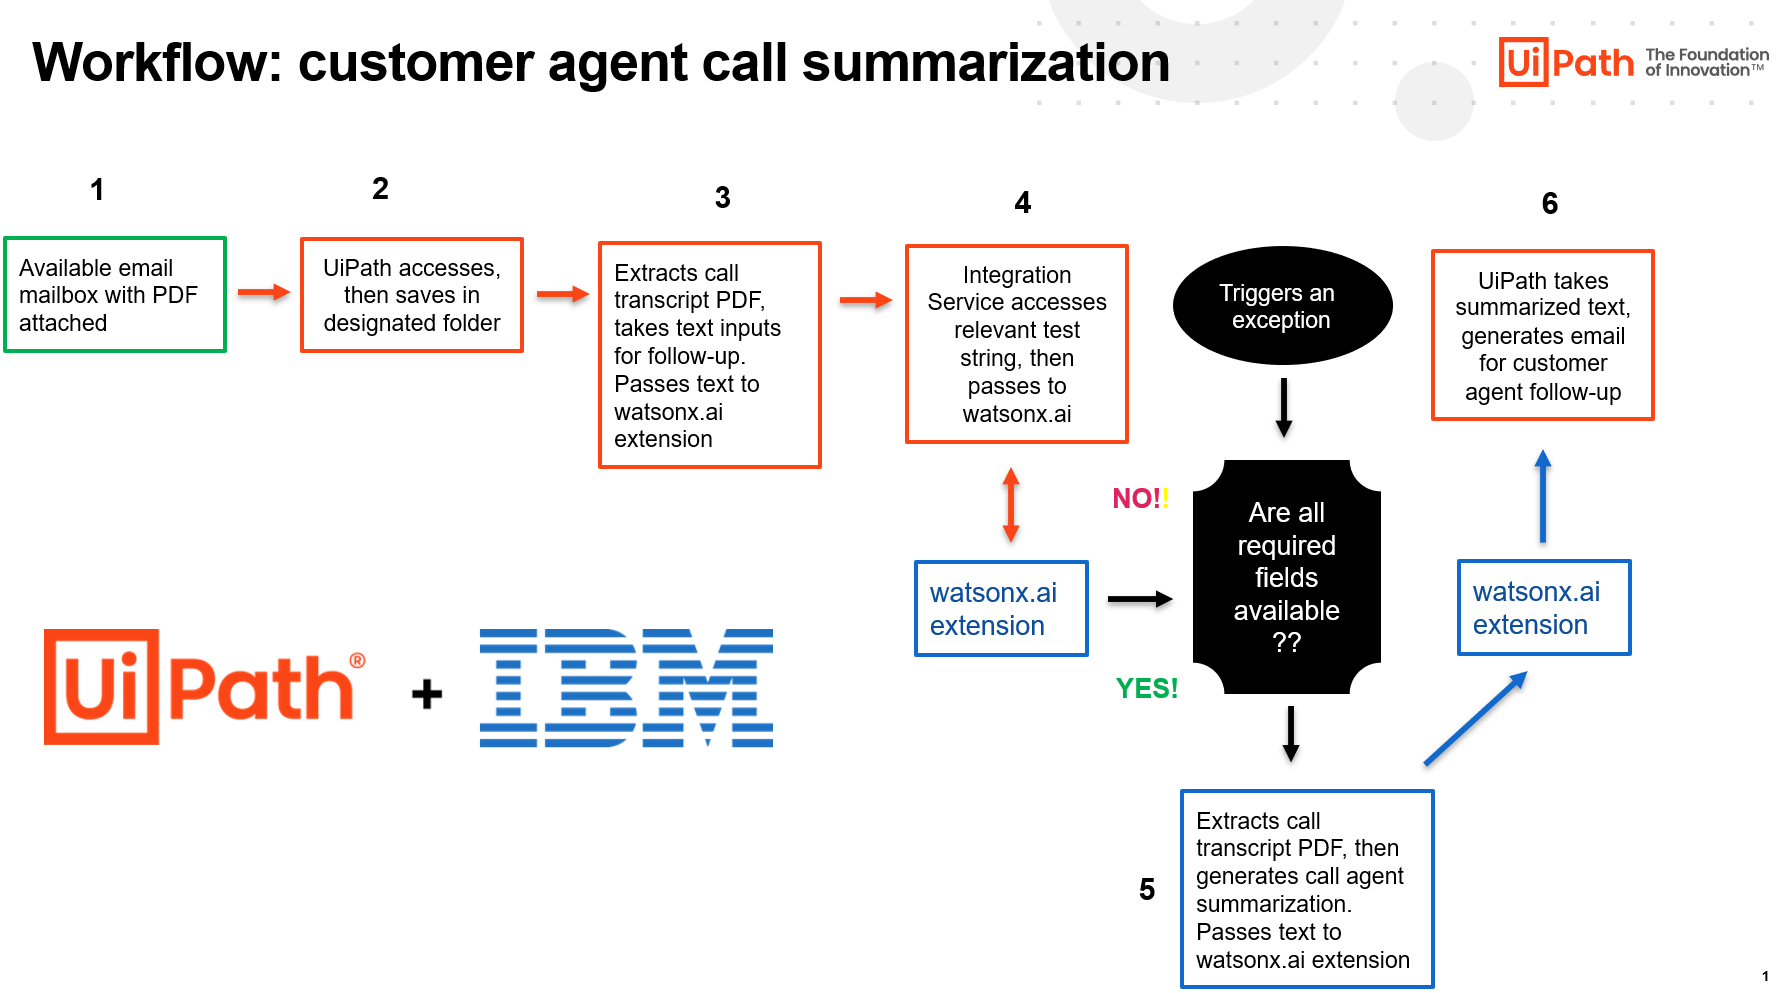 UiPath and IBM watsonx.ai customer agent call summarization workflow